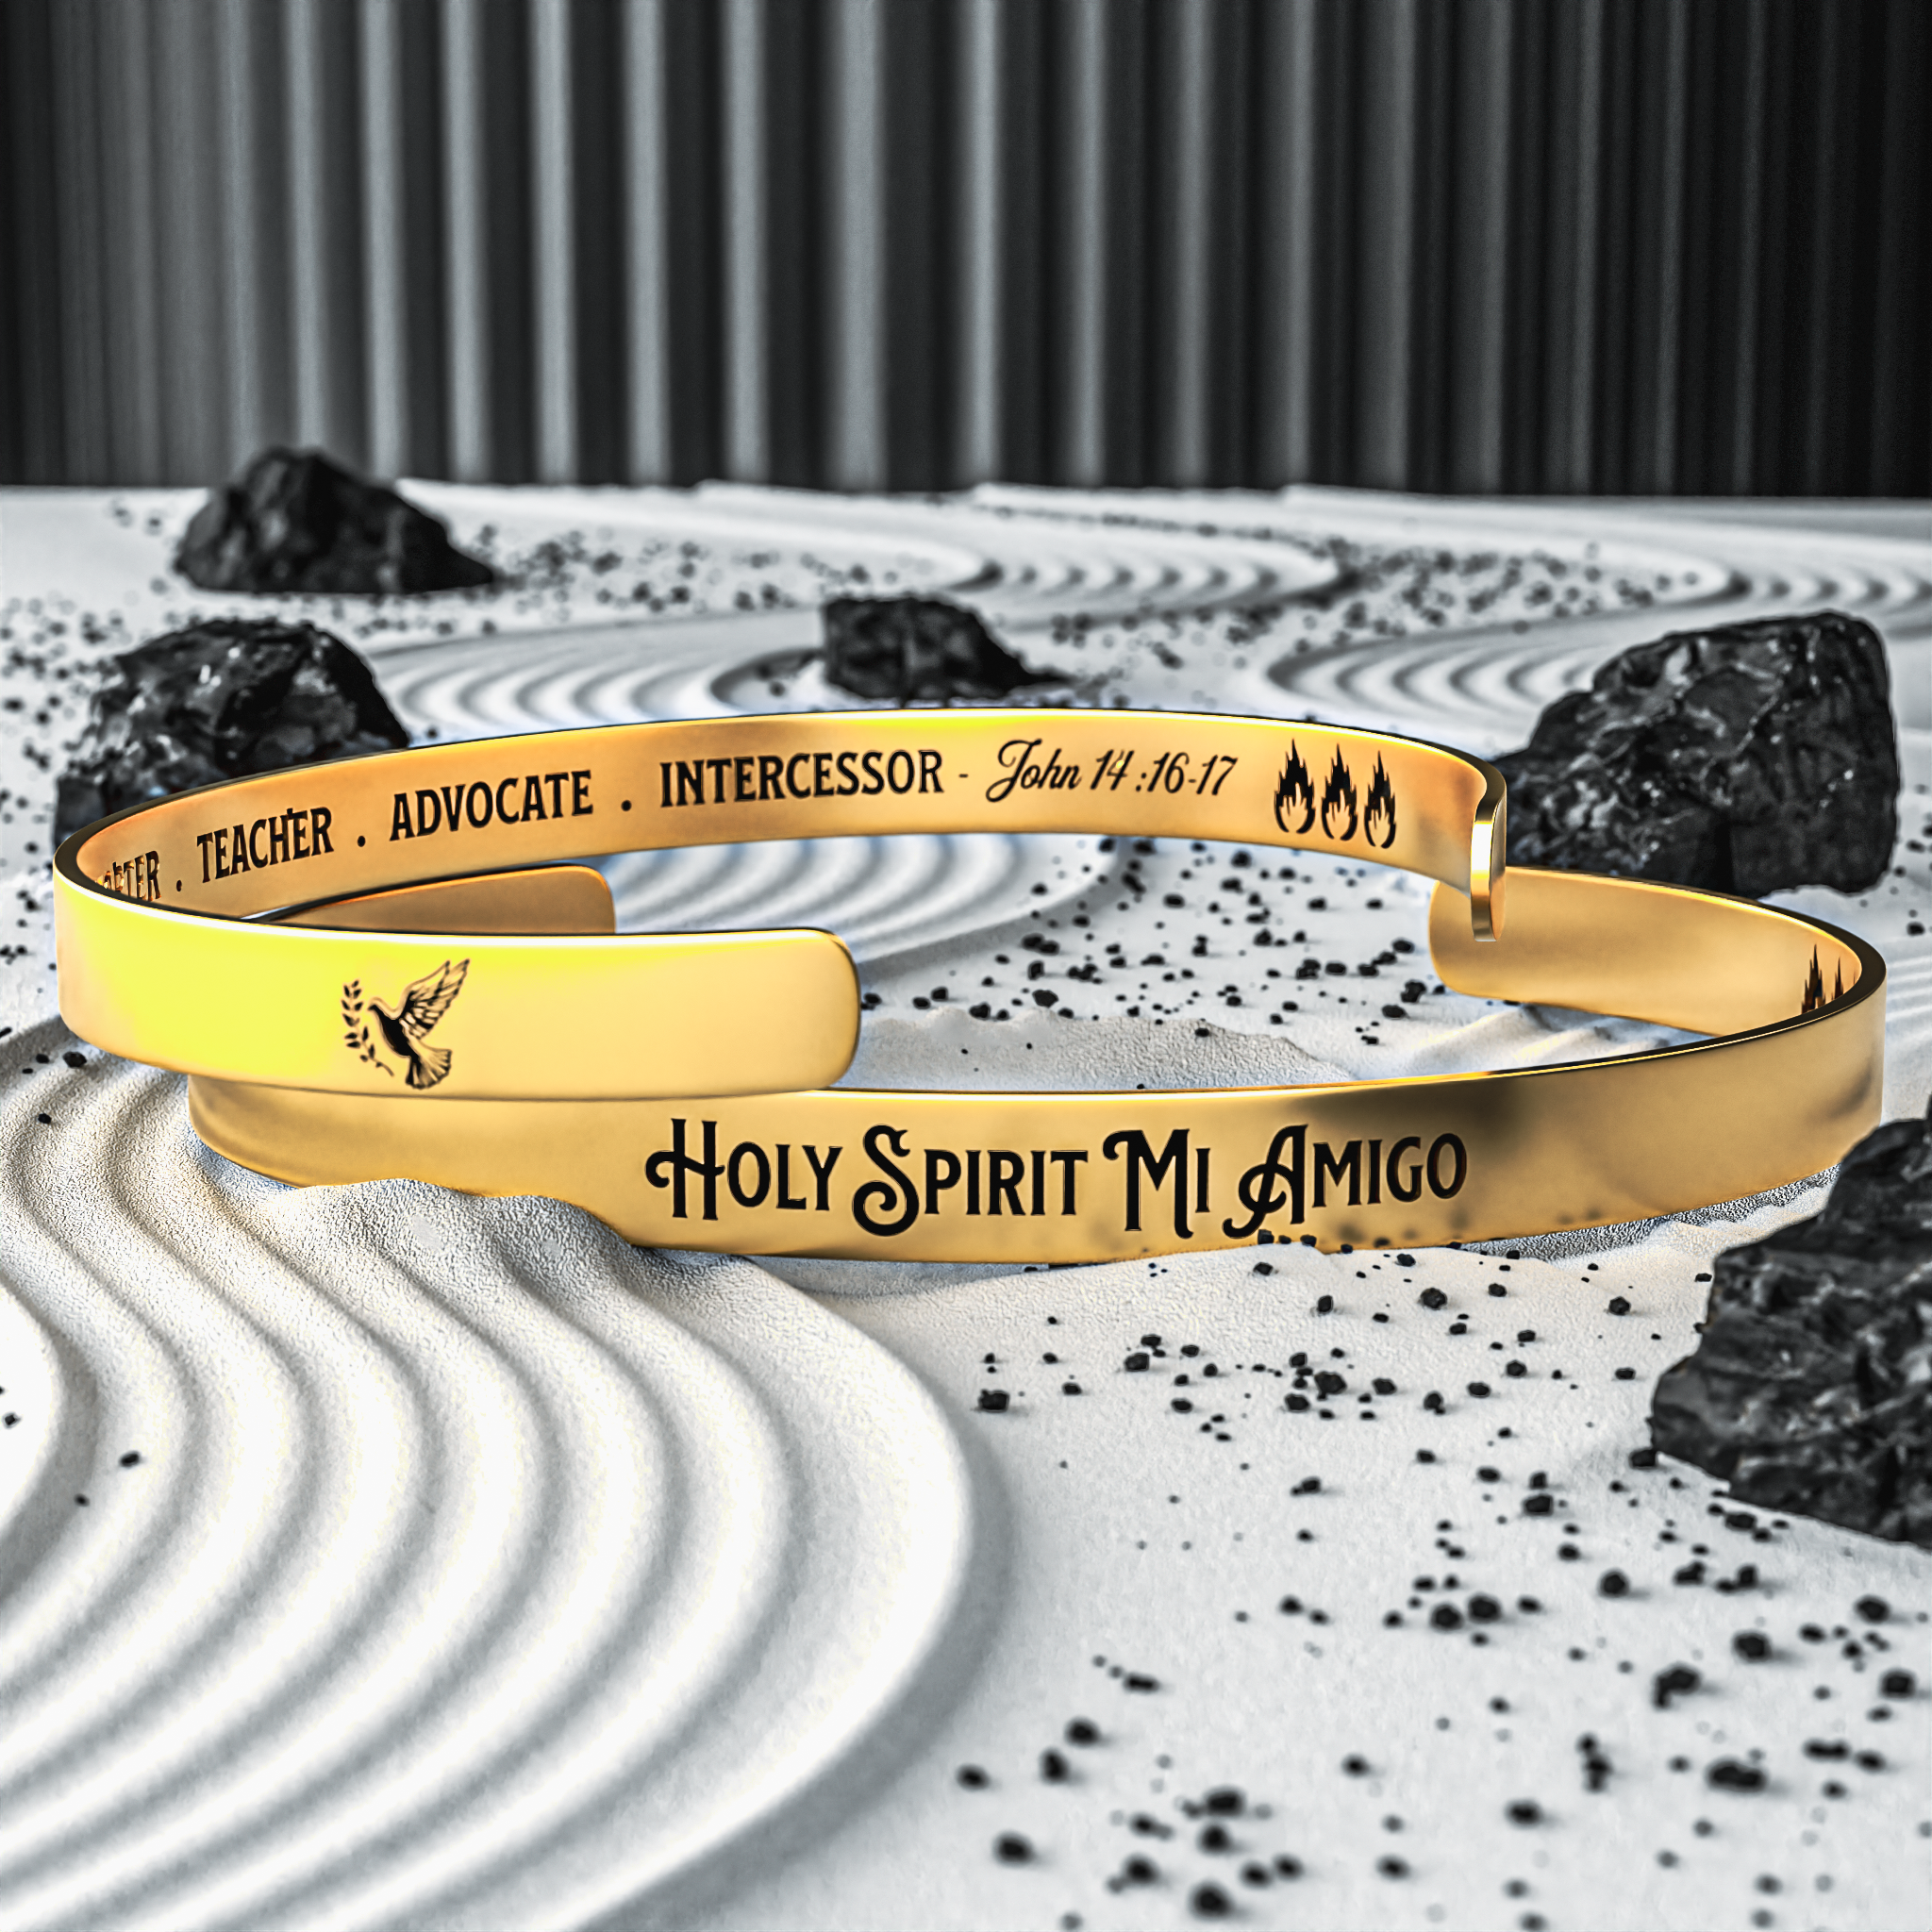 Holy Spirit Mi Amigo Luxury Cuff Bracelet | Gold, Silver, Rose Gold